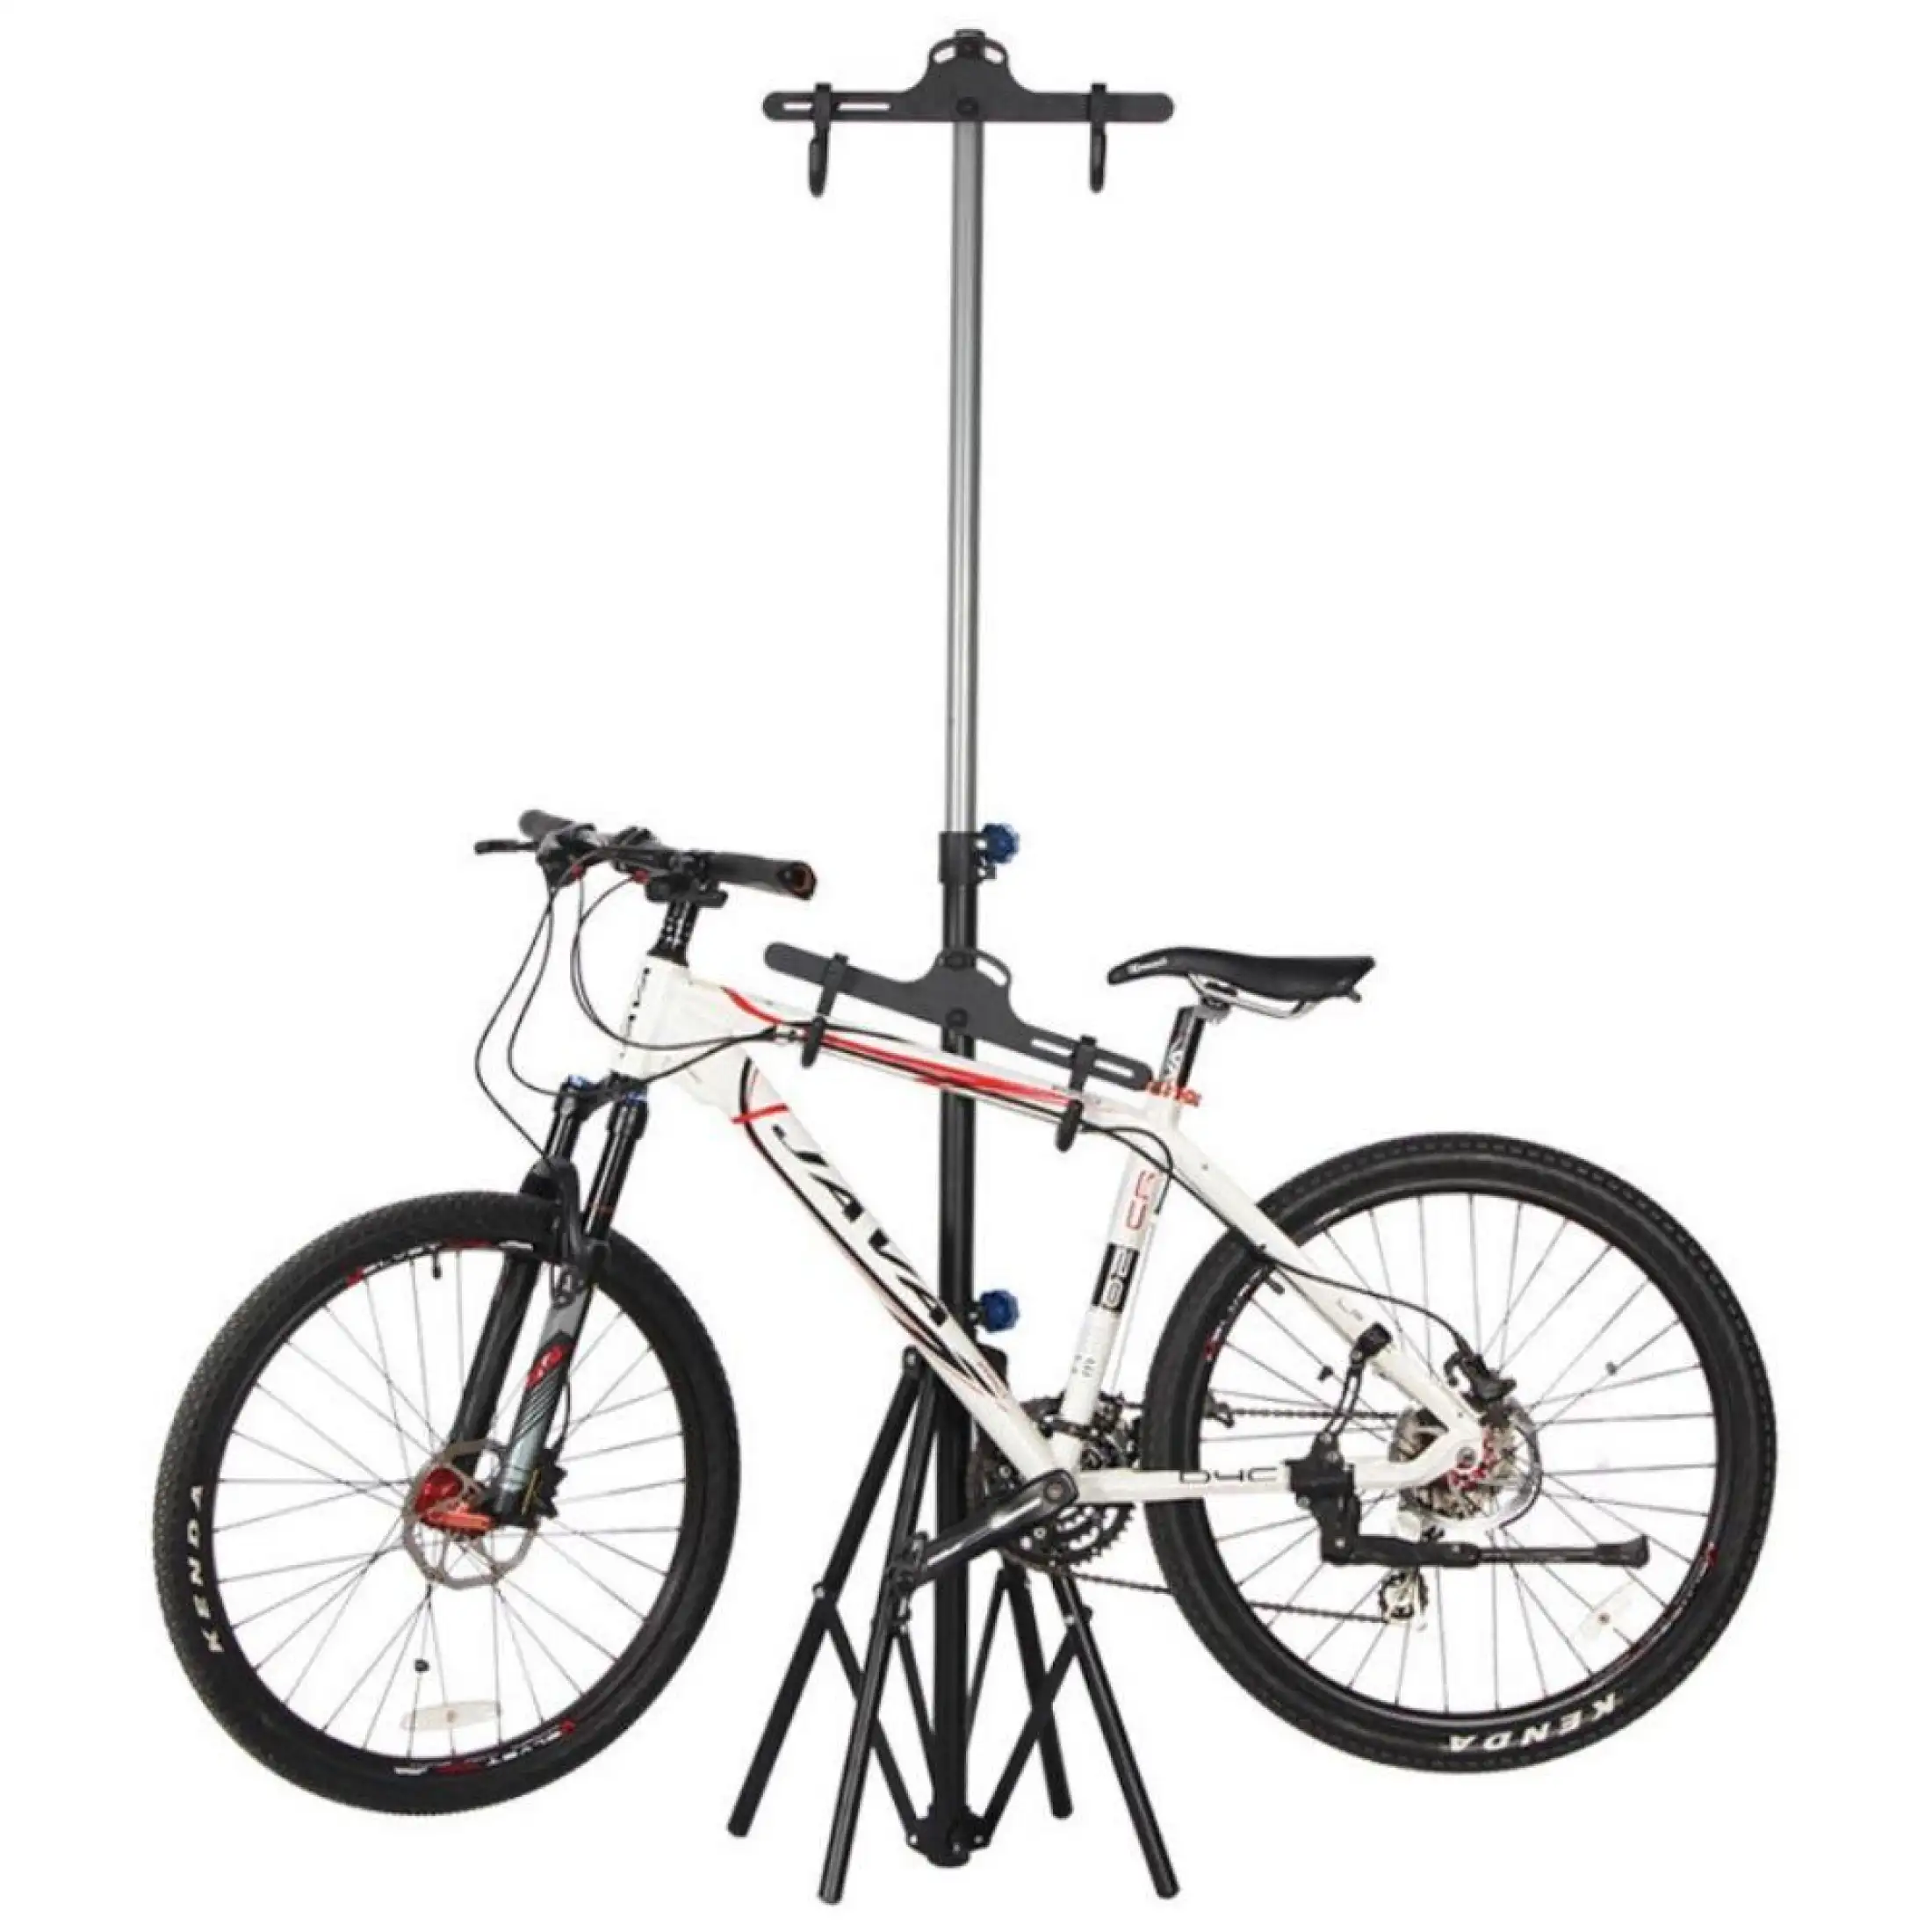 freestanding bicycle rack